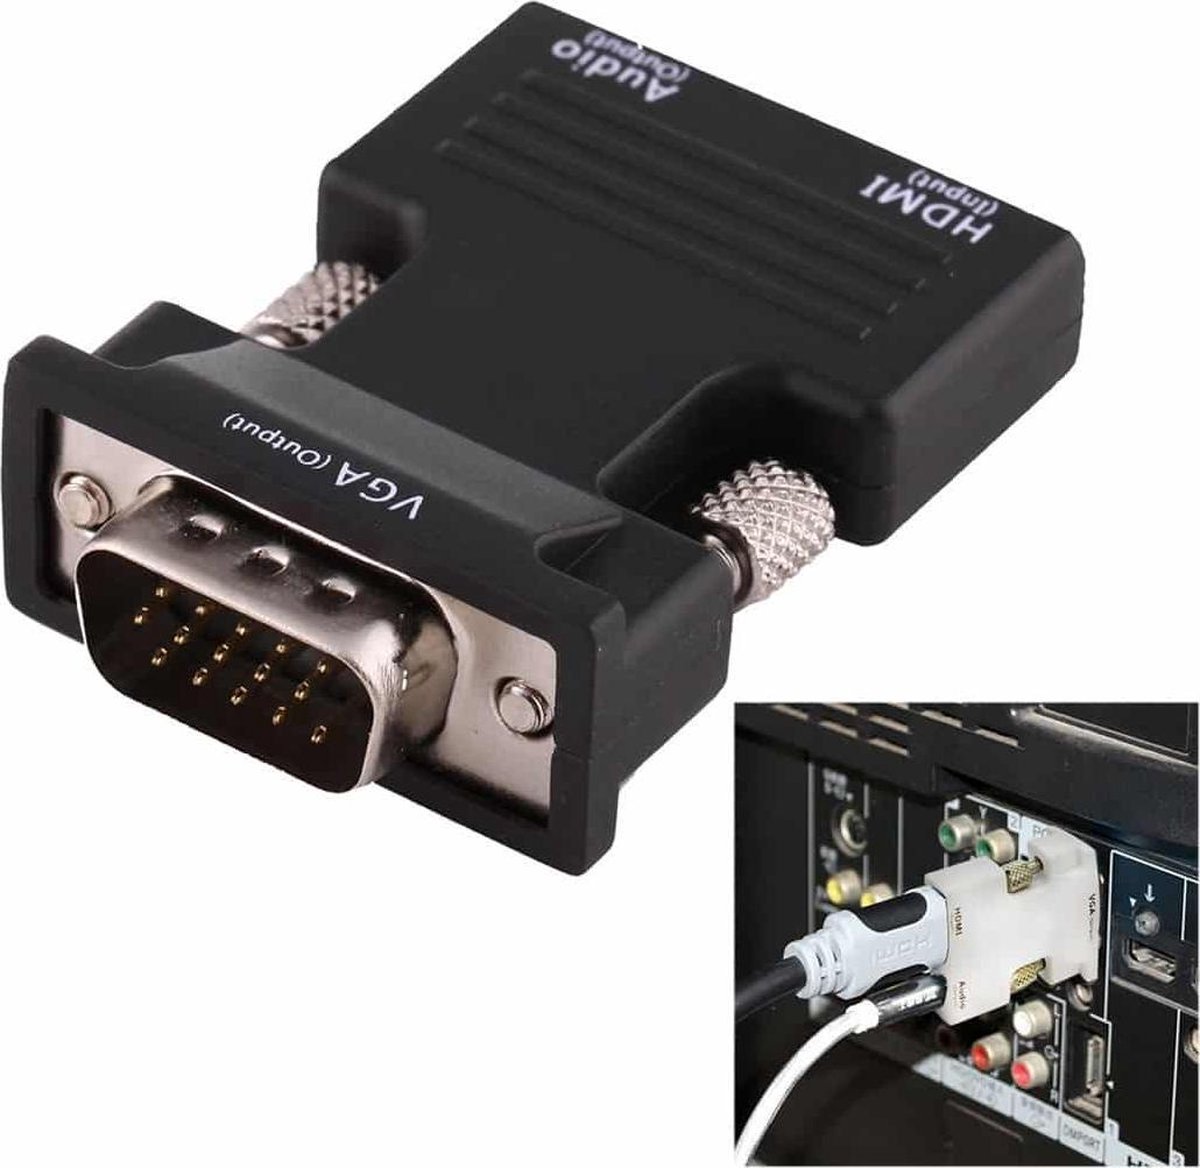 HDMI Female naar VGA Male Converter met audio-uitgangsadapter voor projector, monitor, tv-sets (zwart) - Merkloos